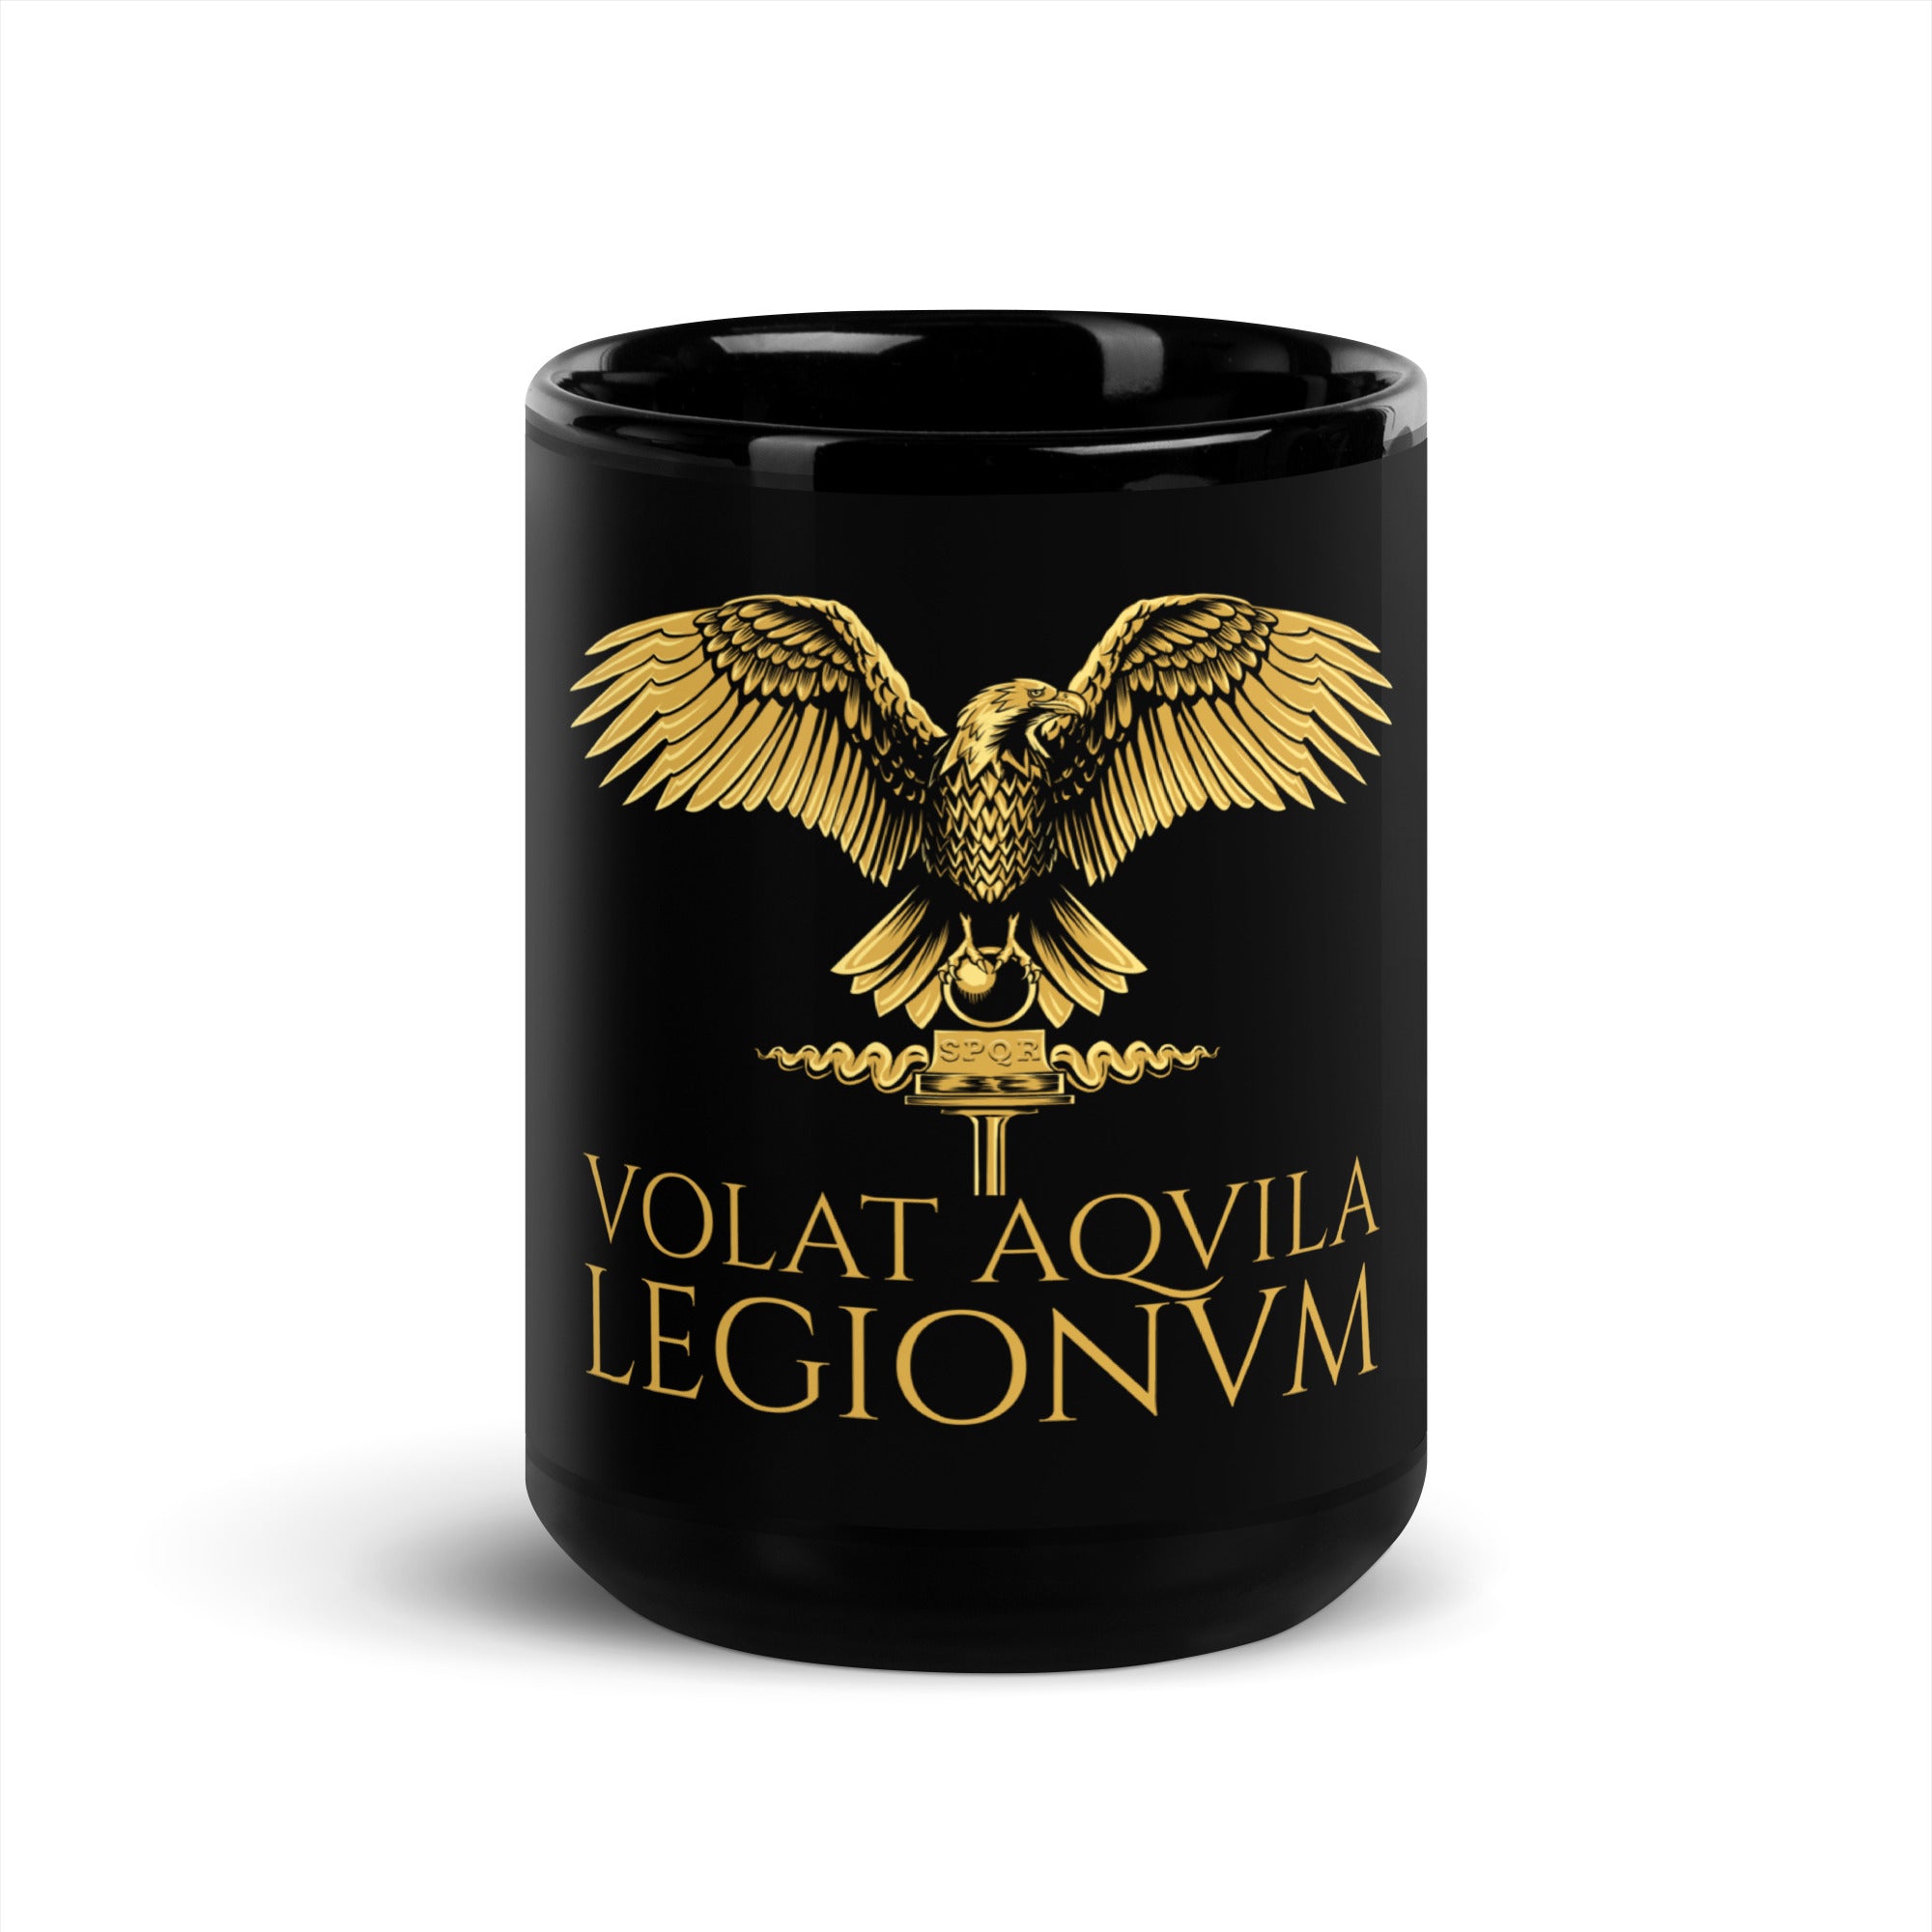 Volat Aquila Legionum - Classical Latin - Ancient Roman Legionary Eagle Black Glossy Mug